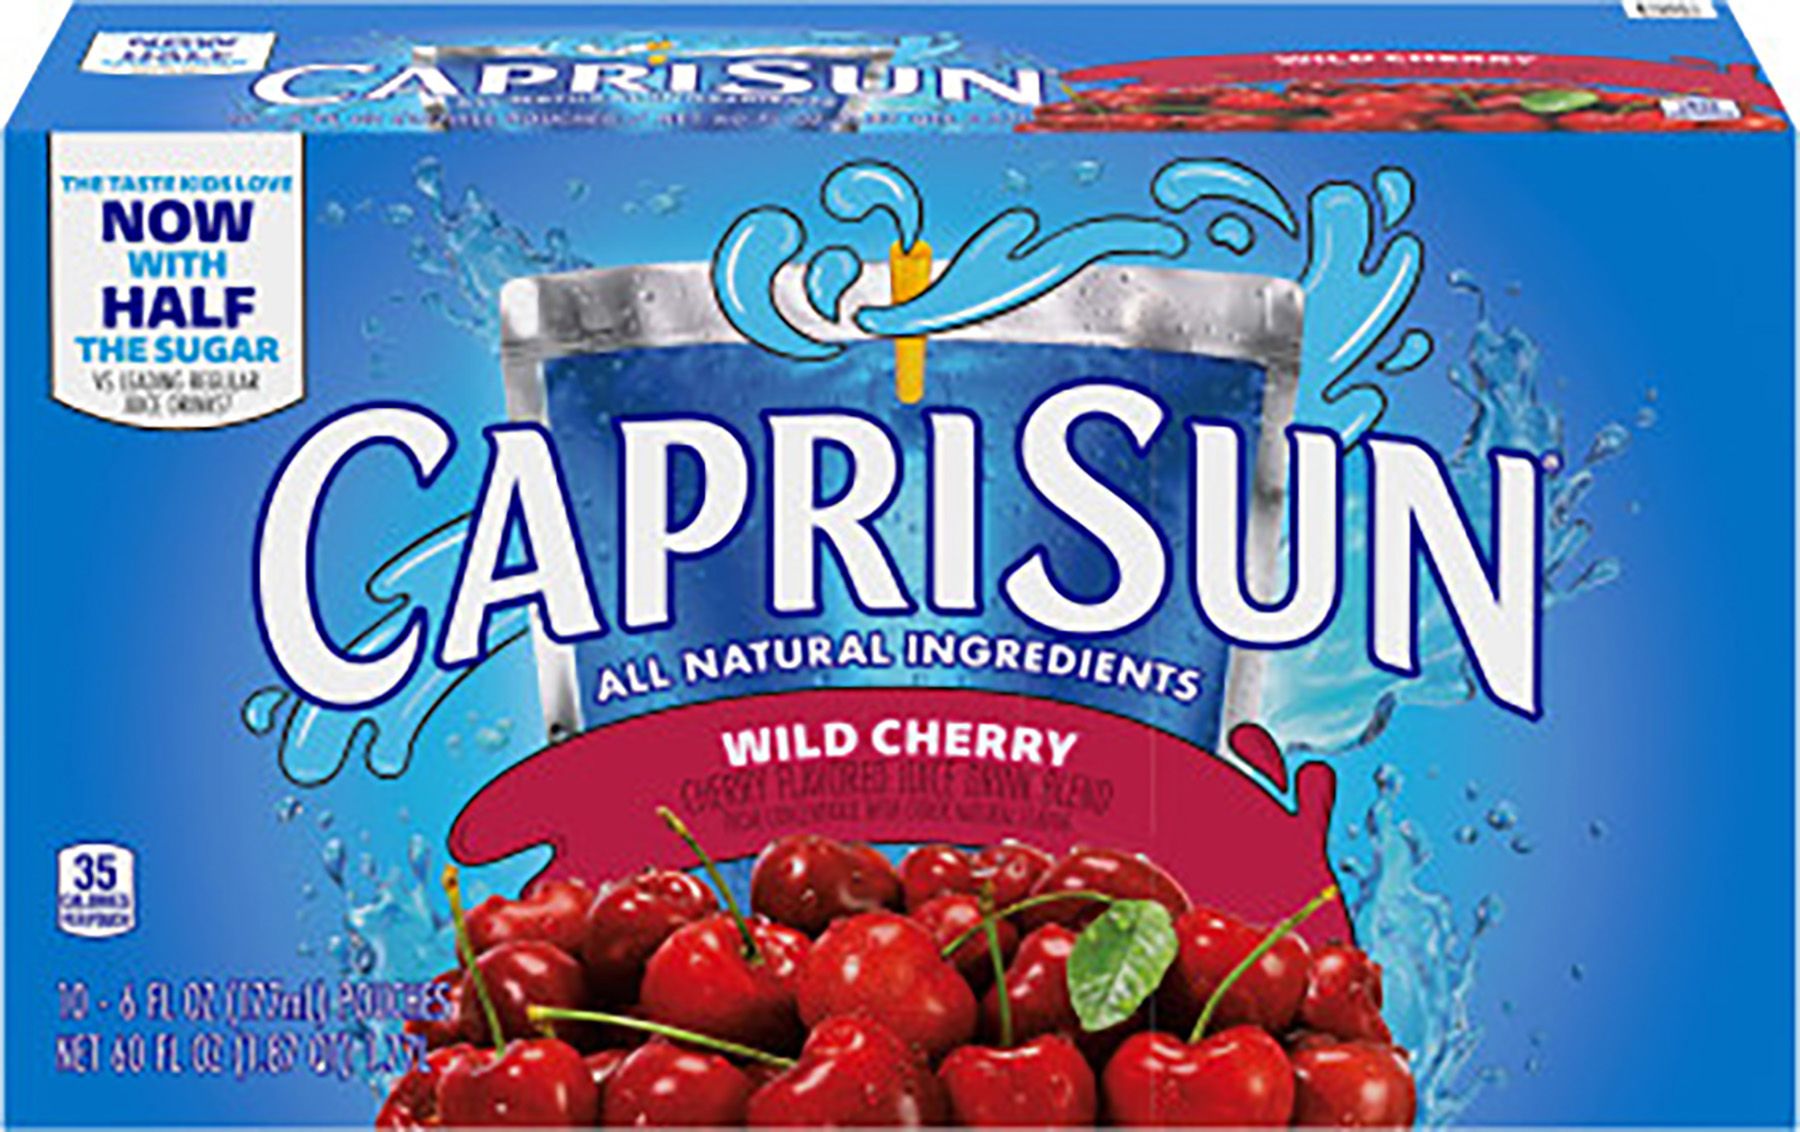 https://media.cnn.com/api/v1/images/stellar/prod/220816070535-01-capri-sun-wild-cherry-flavored-juice.jpg?c=original